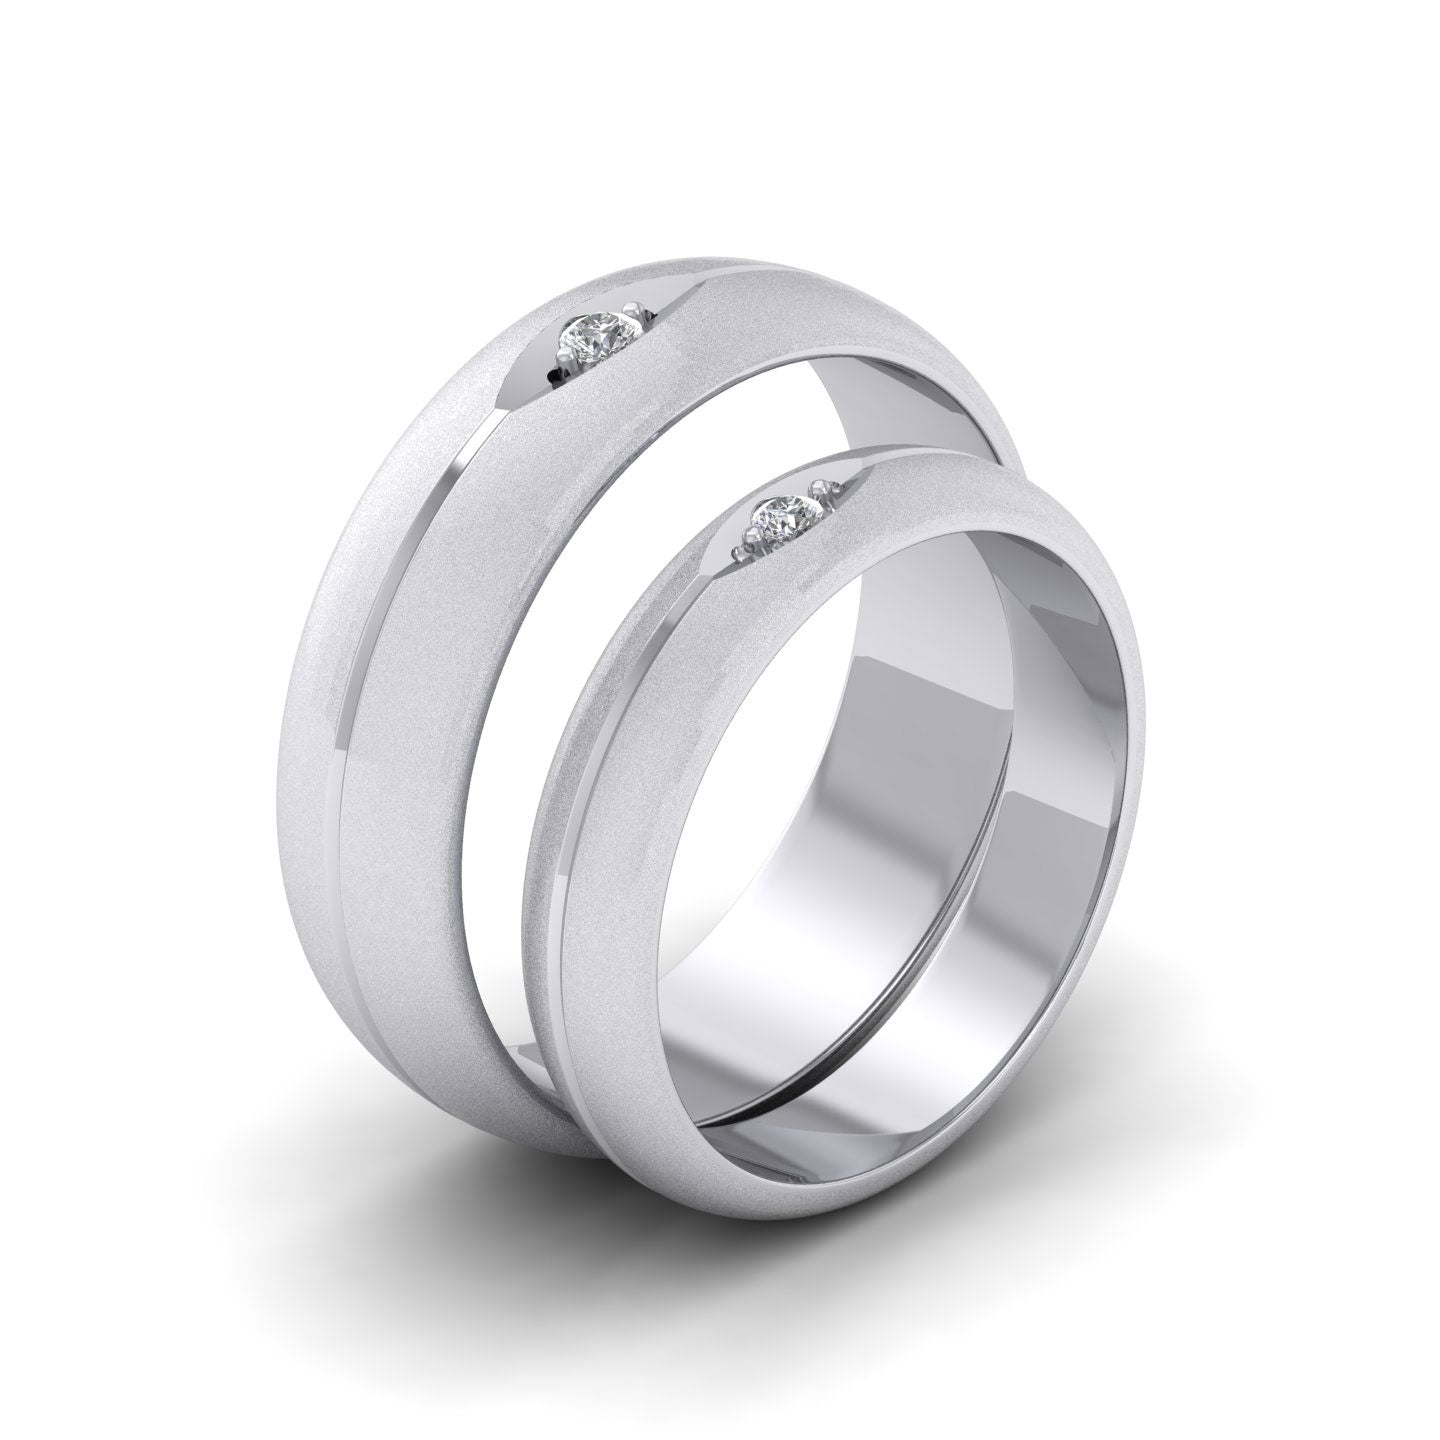 Diamond Set And Centre Line Pattern 950 Palladium 4mm Wedding Ring